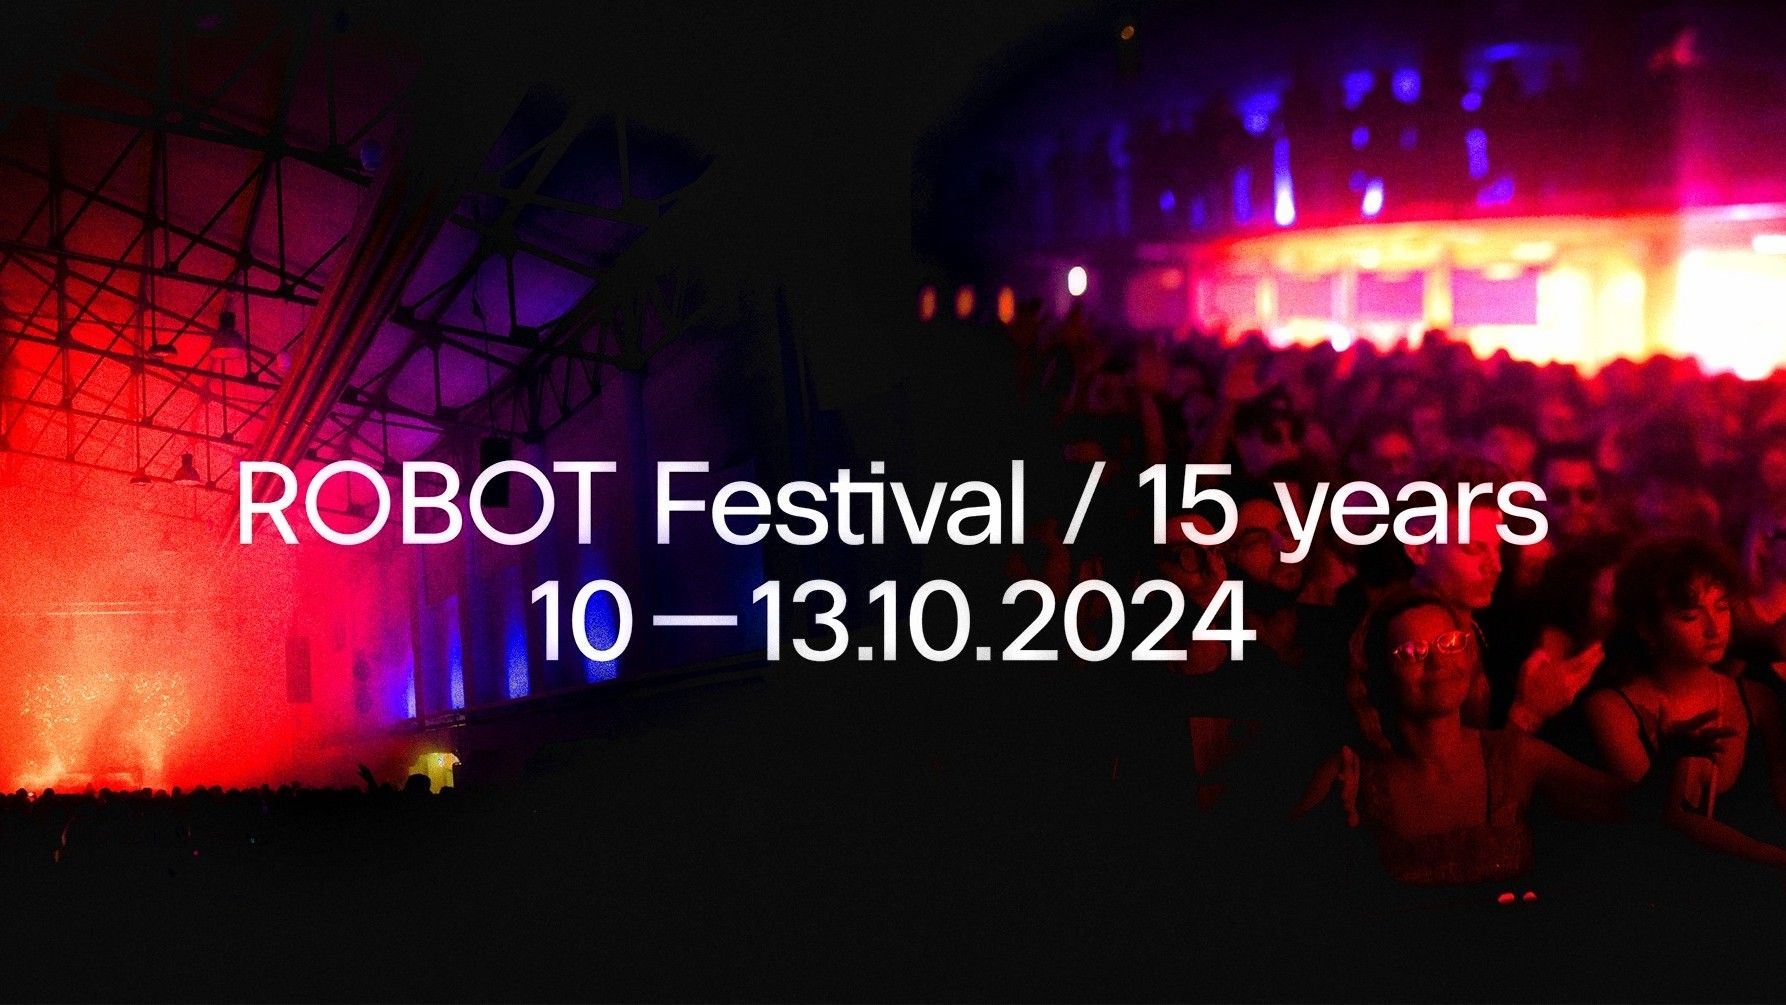 Robot Festival / 15 years